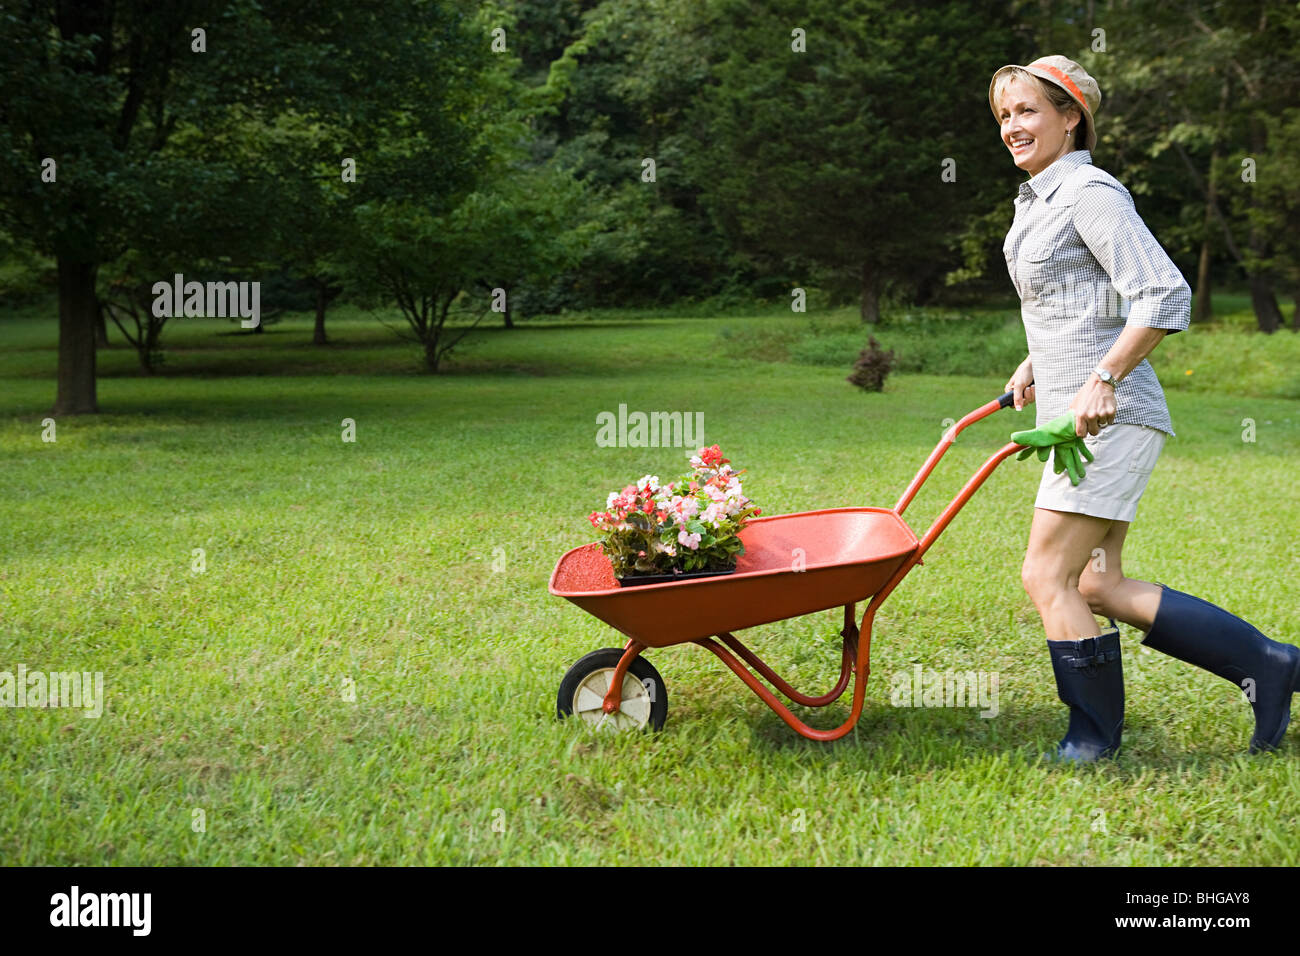 Woman with wheelbarrow of plants Stock Photo